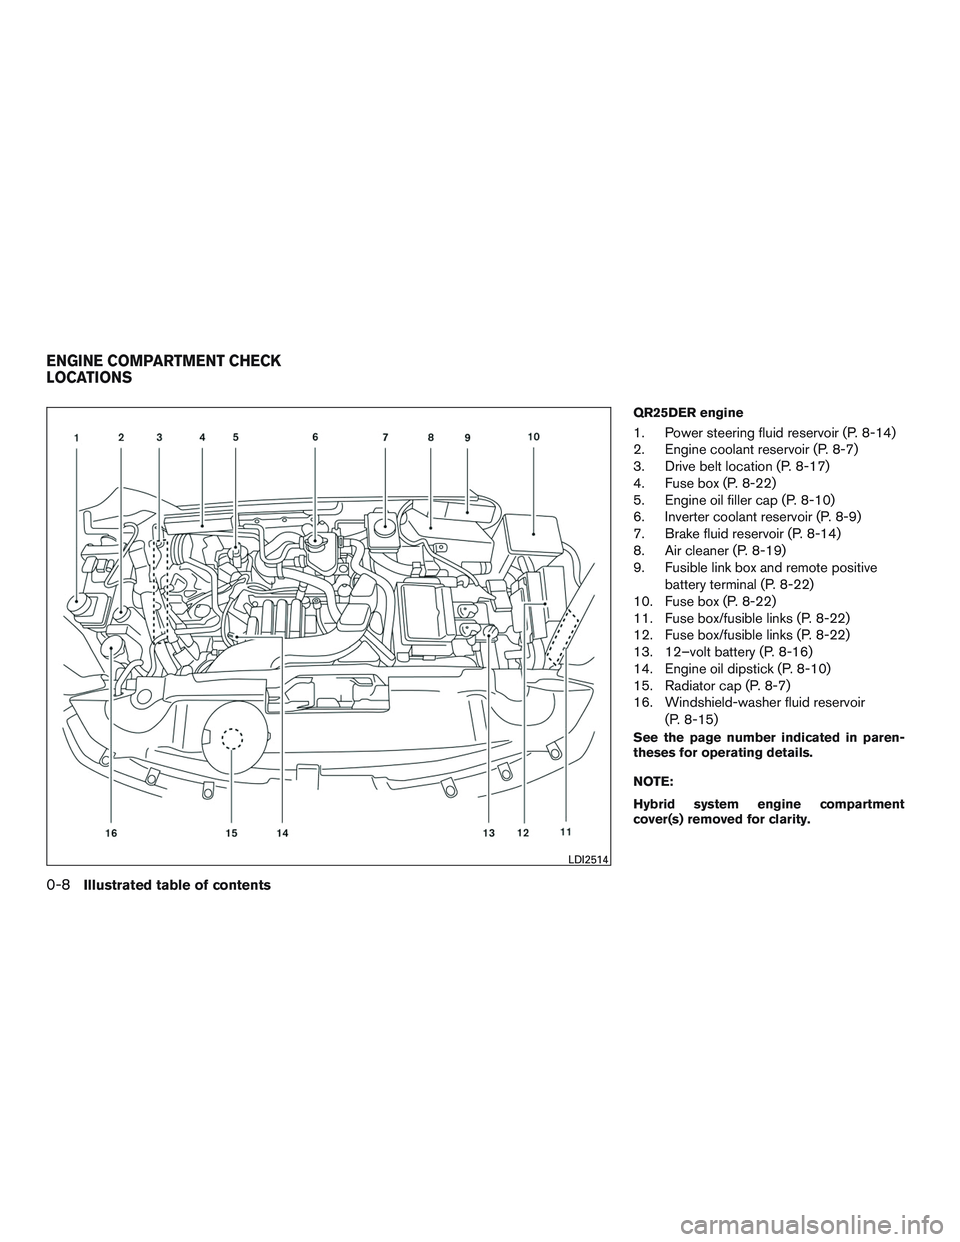 NISSAN PATHFINDER HYBRID 2015  Owners Manual QR25DER engine
1. Power steering fluid reservoir (P. 8-14)
2. Engine coolant reservoir (P. 8-7)
3. Drive belt location (P. 8-17)
4. Fuse box (P. 8-22)
5. Engine oil filler cap (P. 8-10)
6. Inverter co